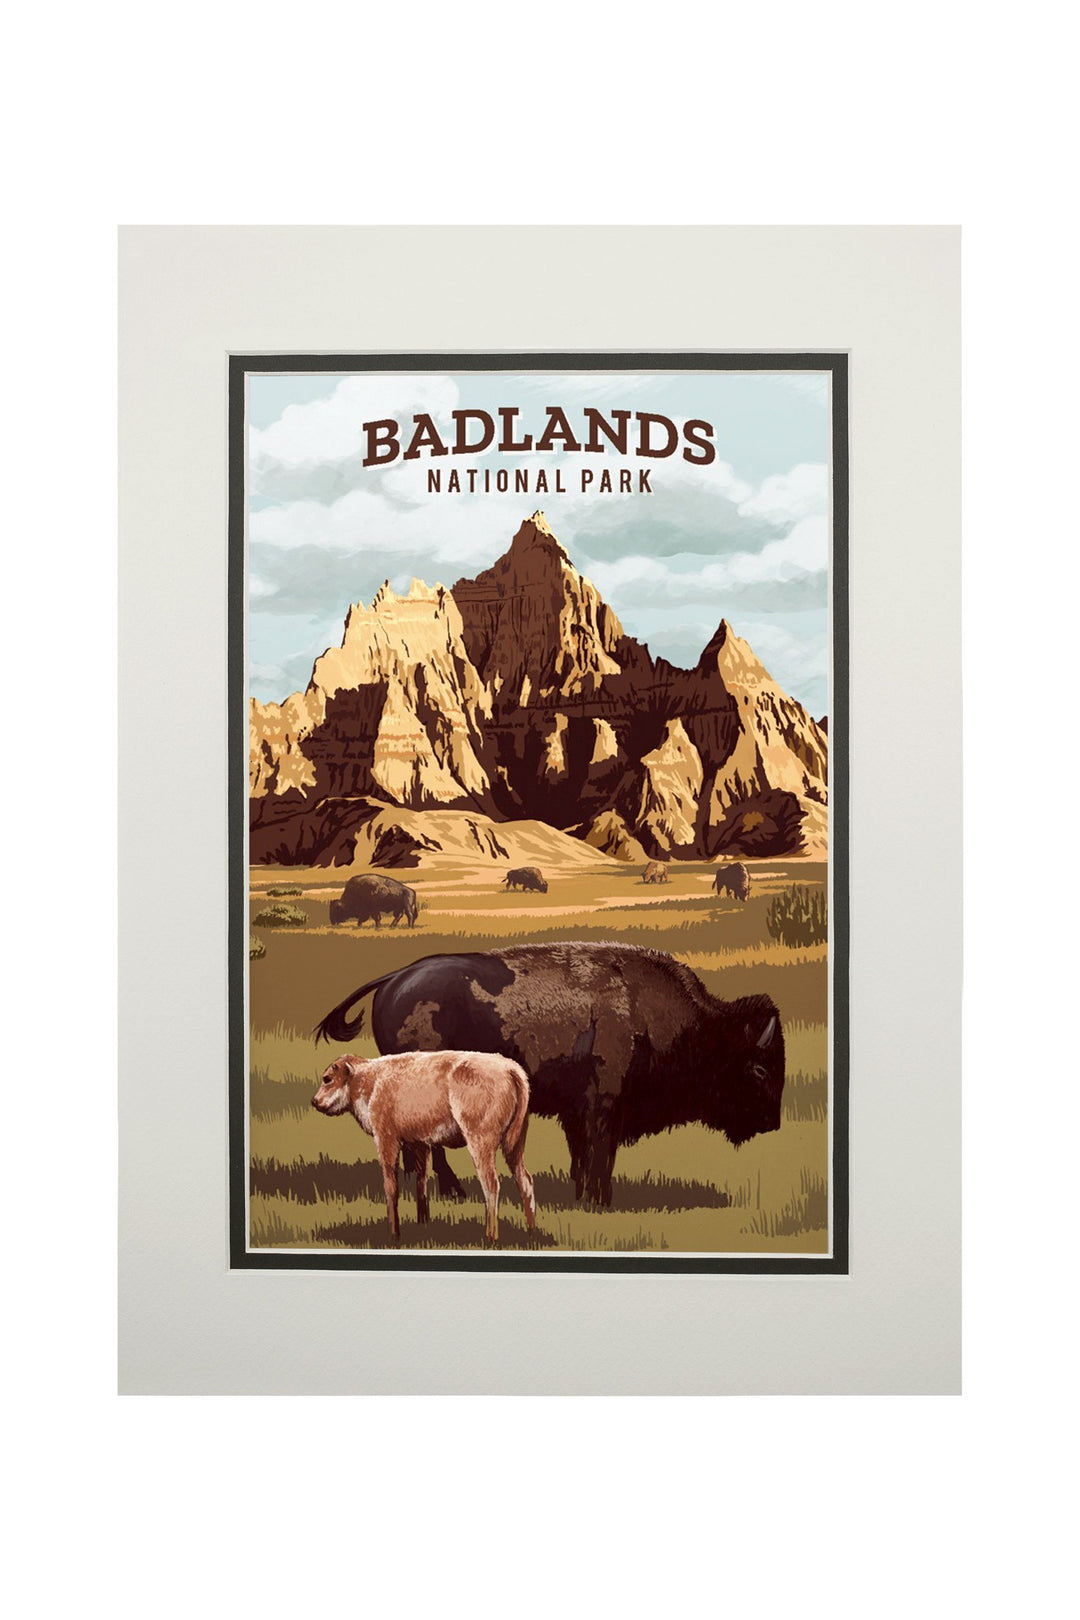 Badlands National Park, South Dakota, Painterly National Park Series, Art Prints and Metal Signs Art Lantern Press 11 x 14 Matted Art Print 